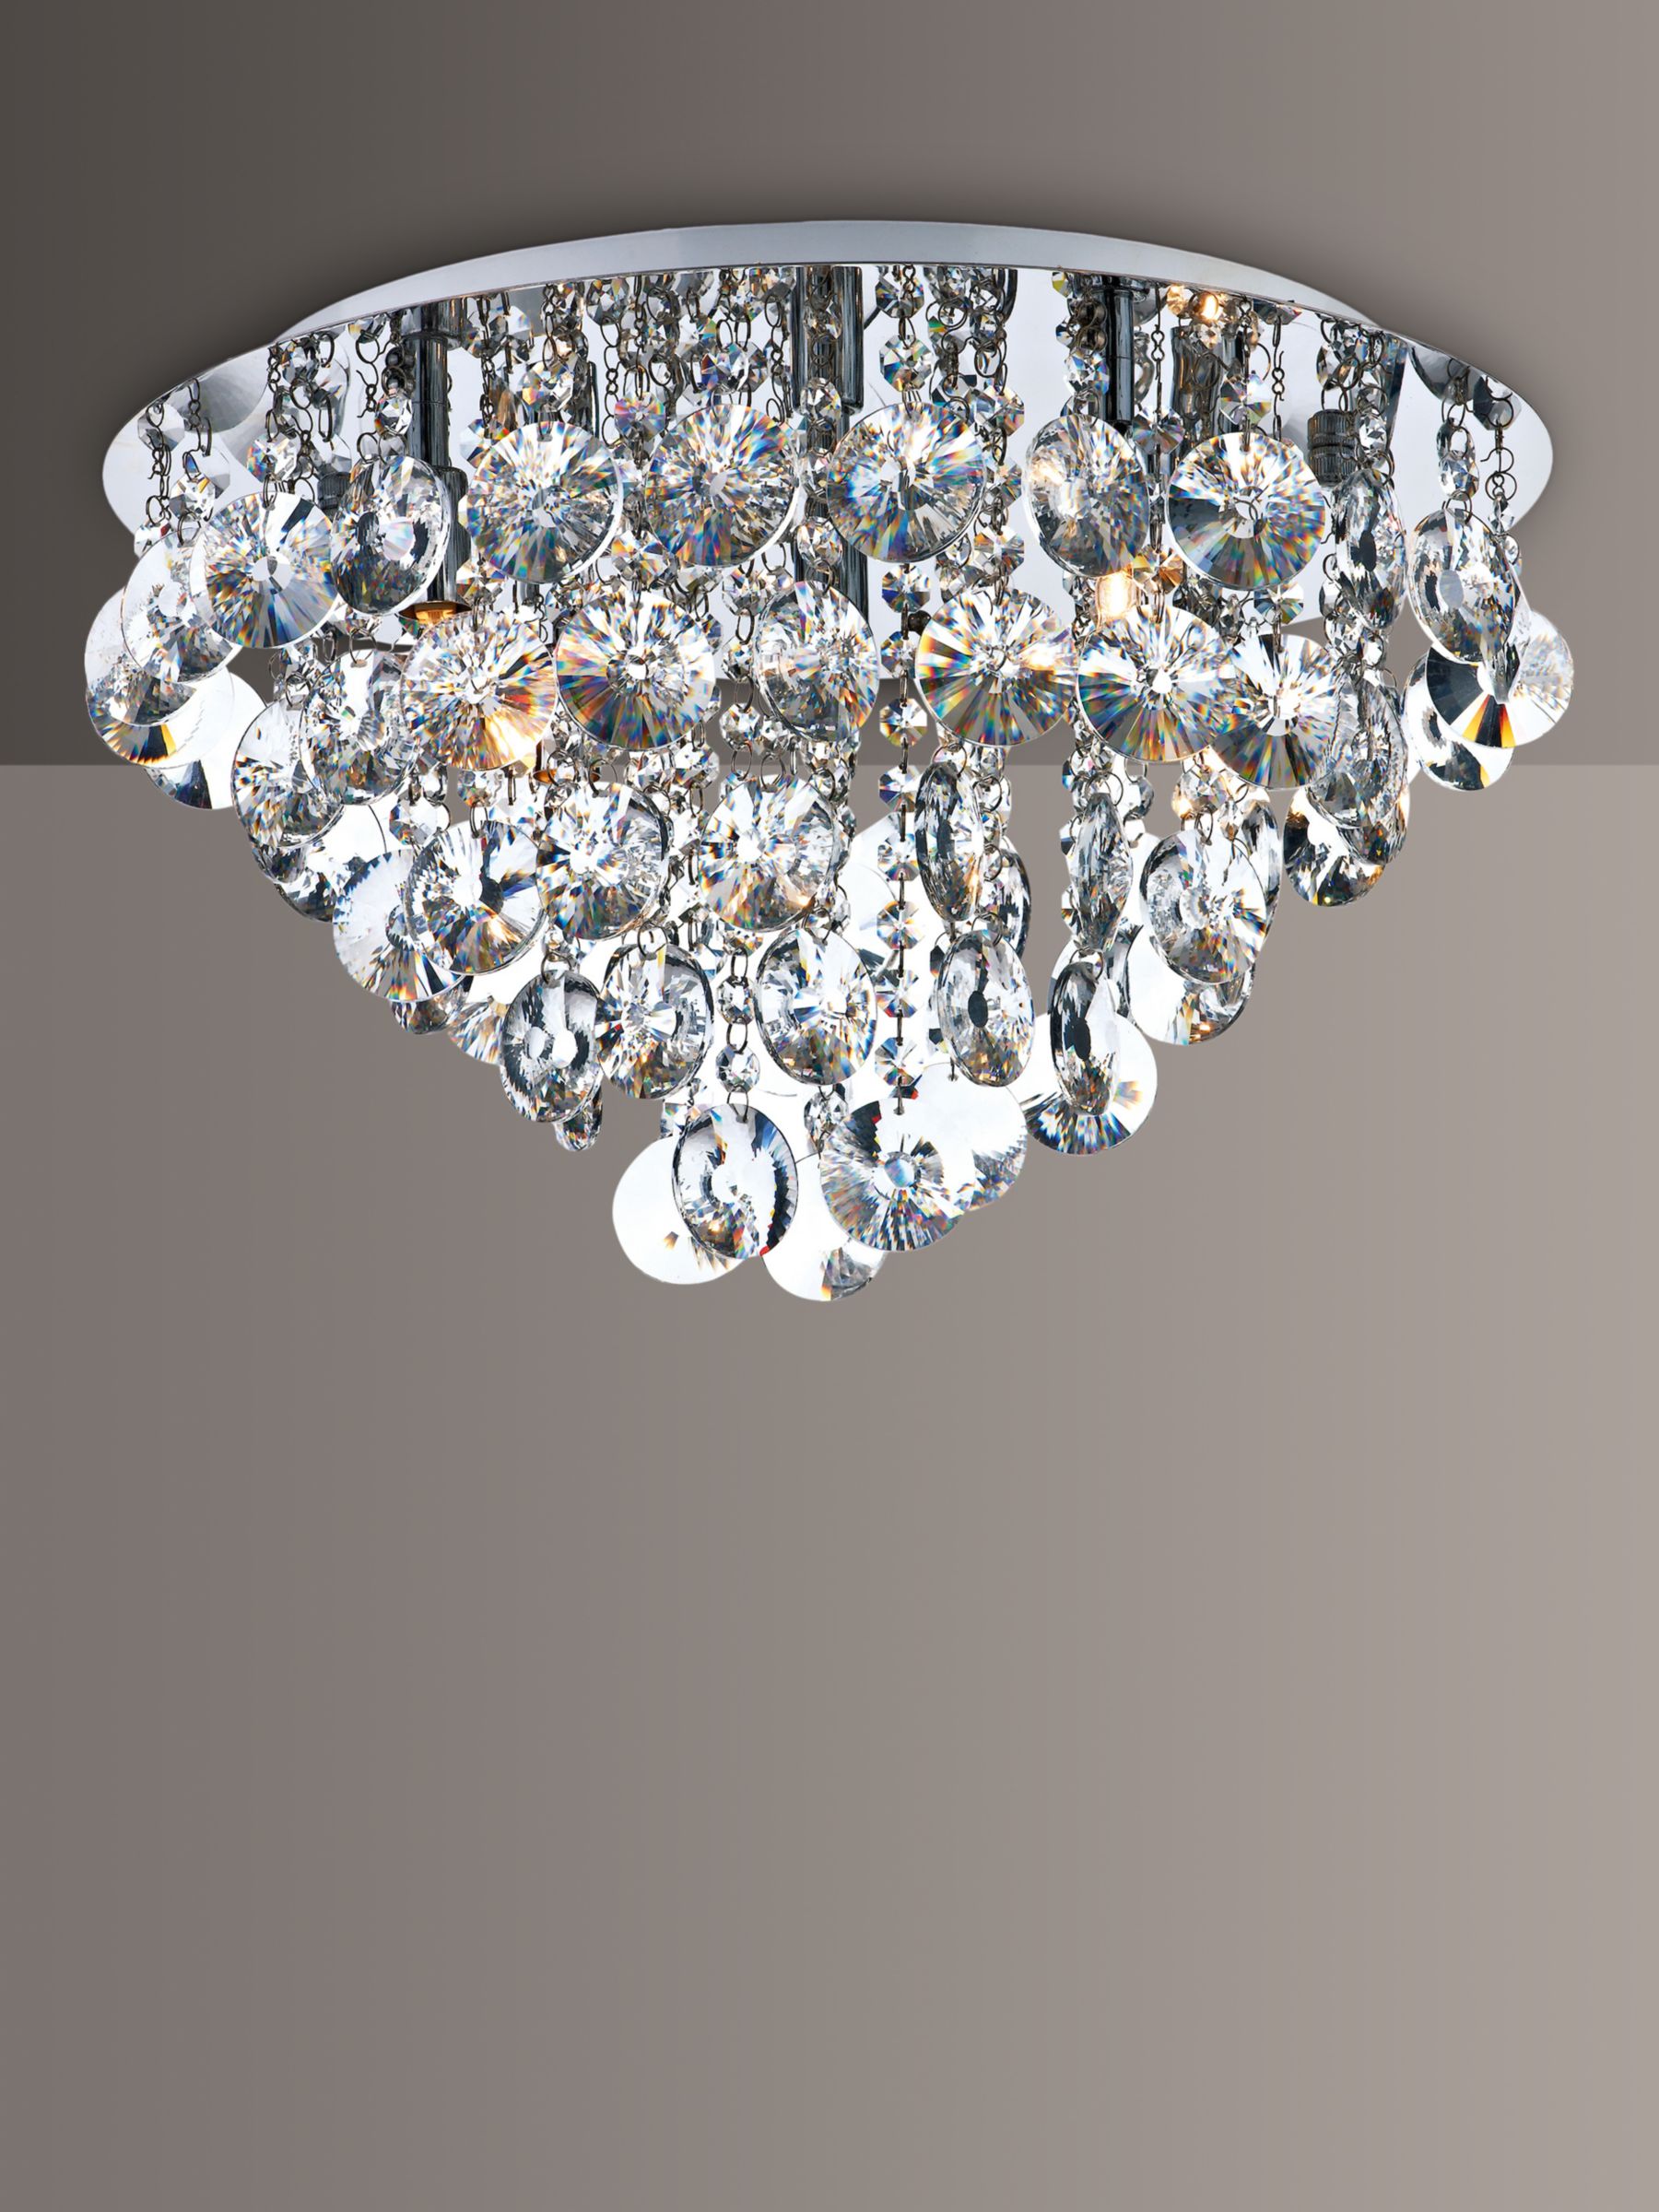 Photo of Där jester crystal semi flush ceiling light